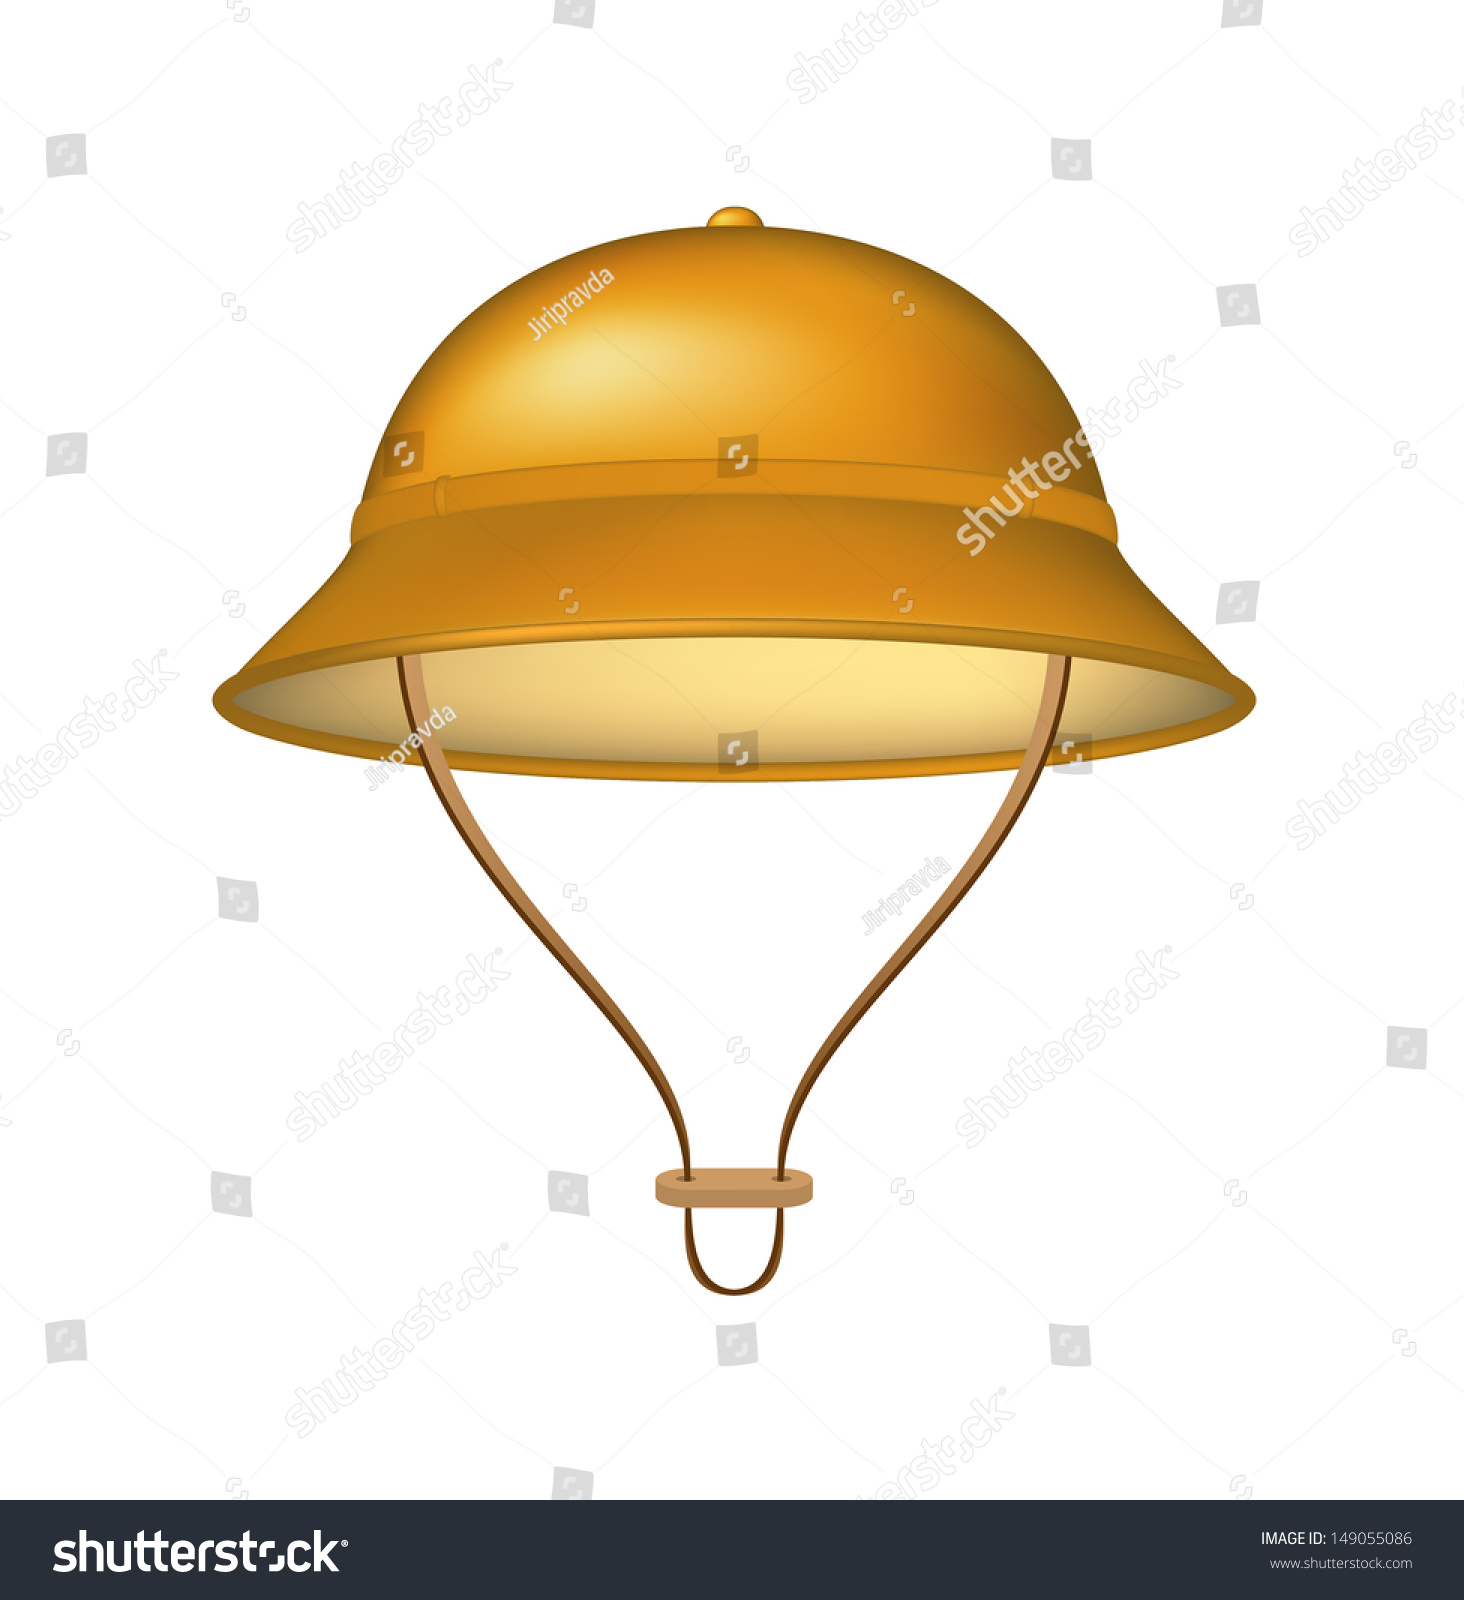 Pith helmet - Royalty Free Stock Vector 149055086 - Avopix.com